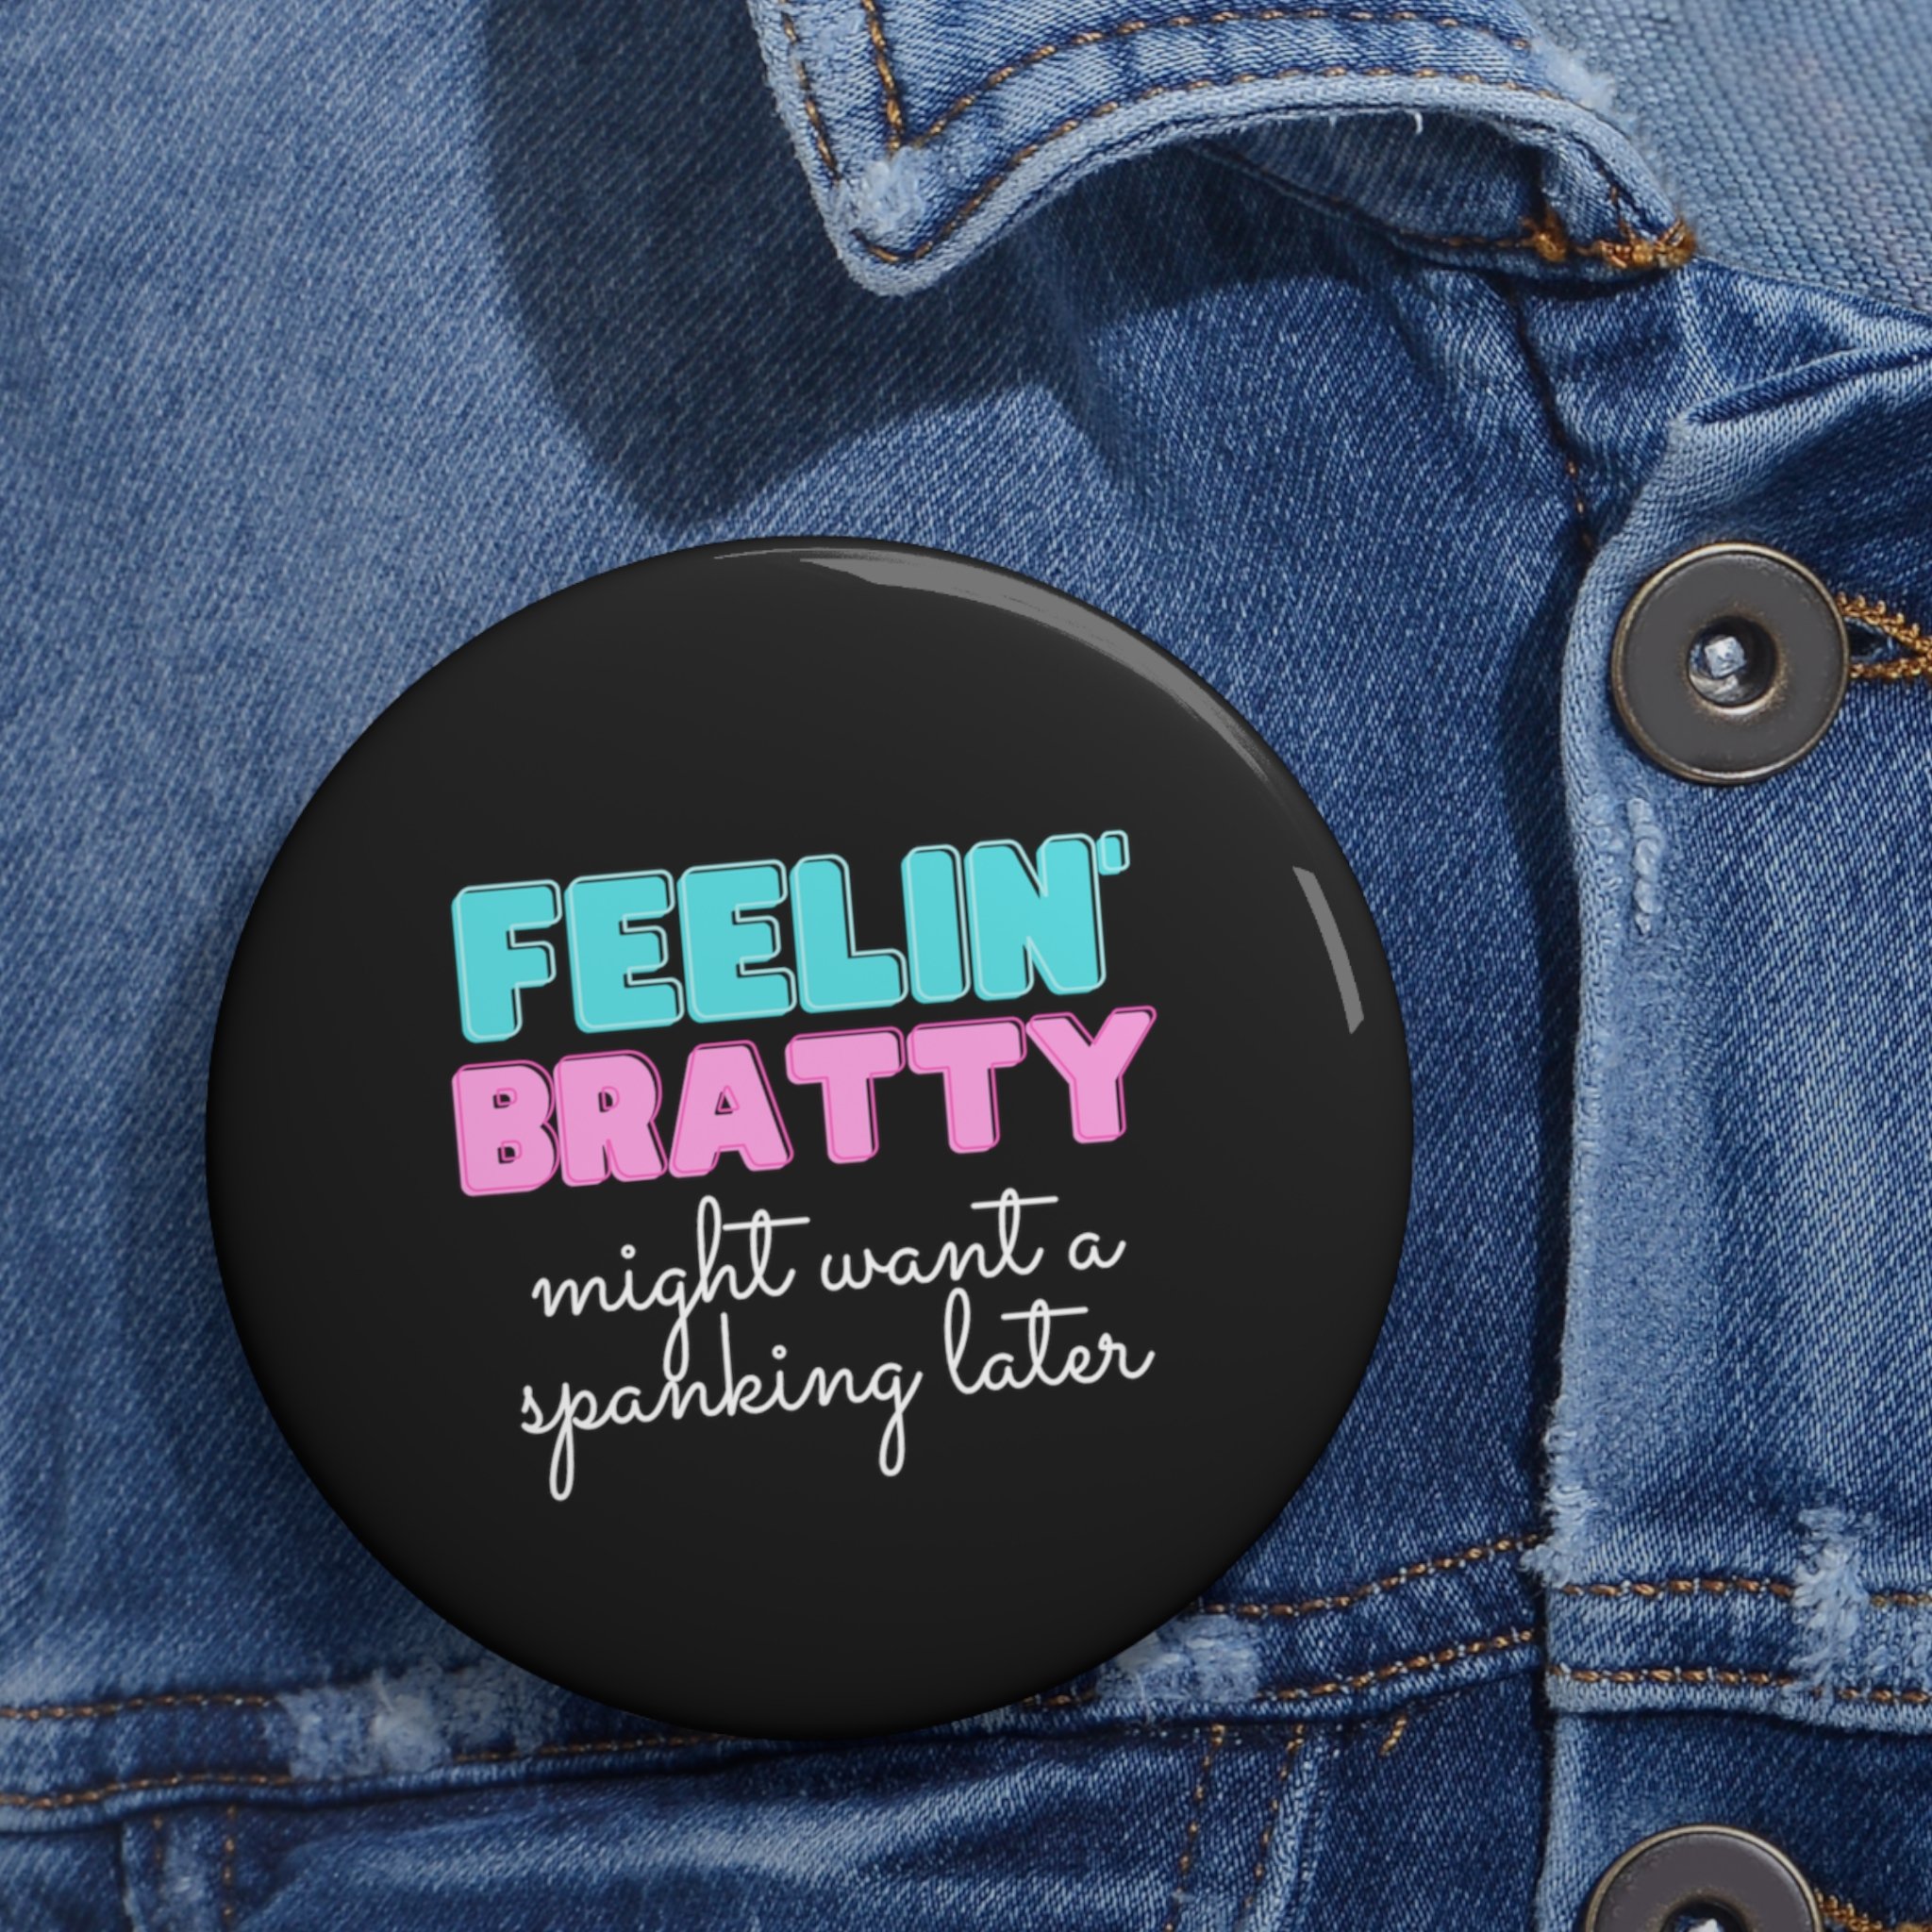 feelin-bratty-might-want-a-spanking-later-pin-button jacket 3.jpg